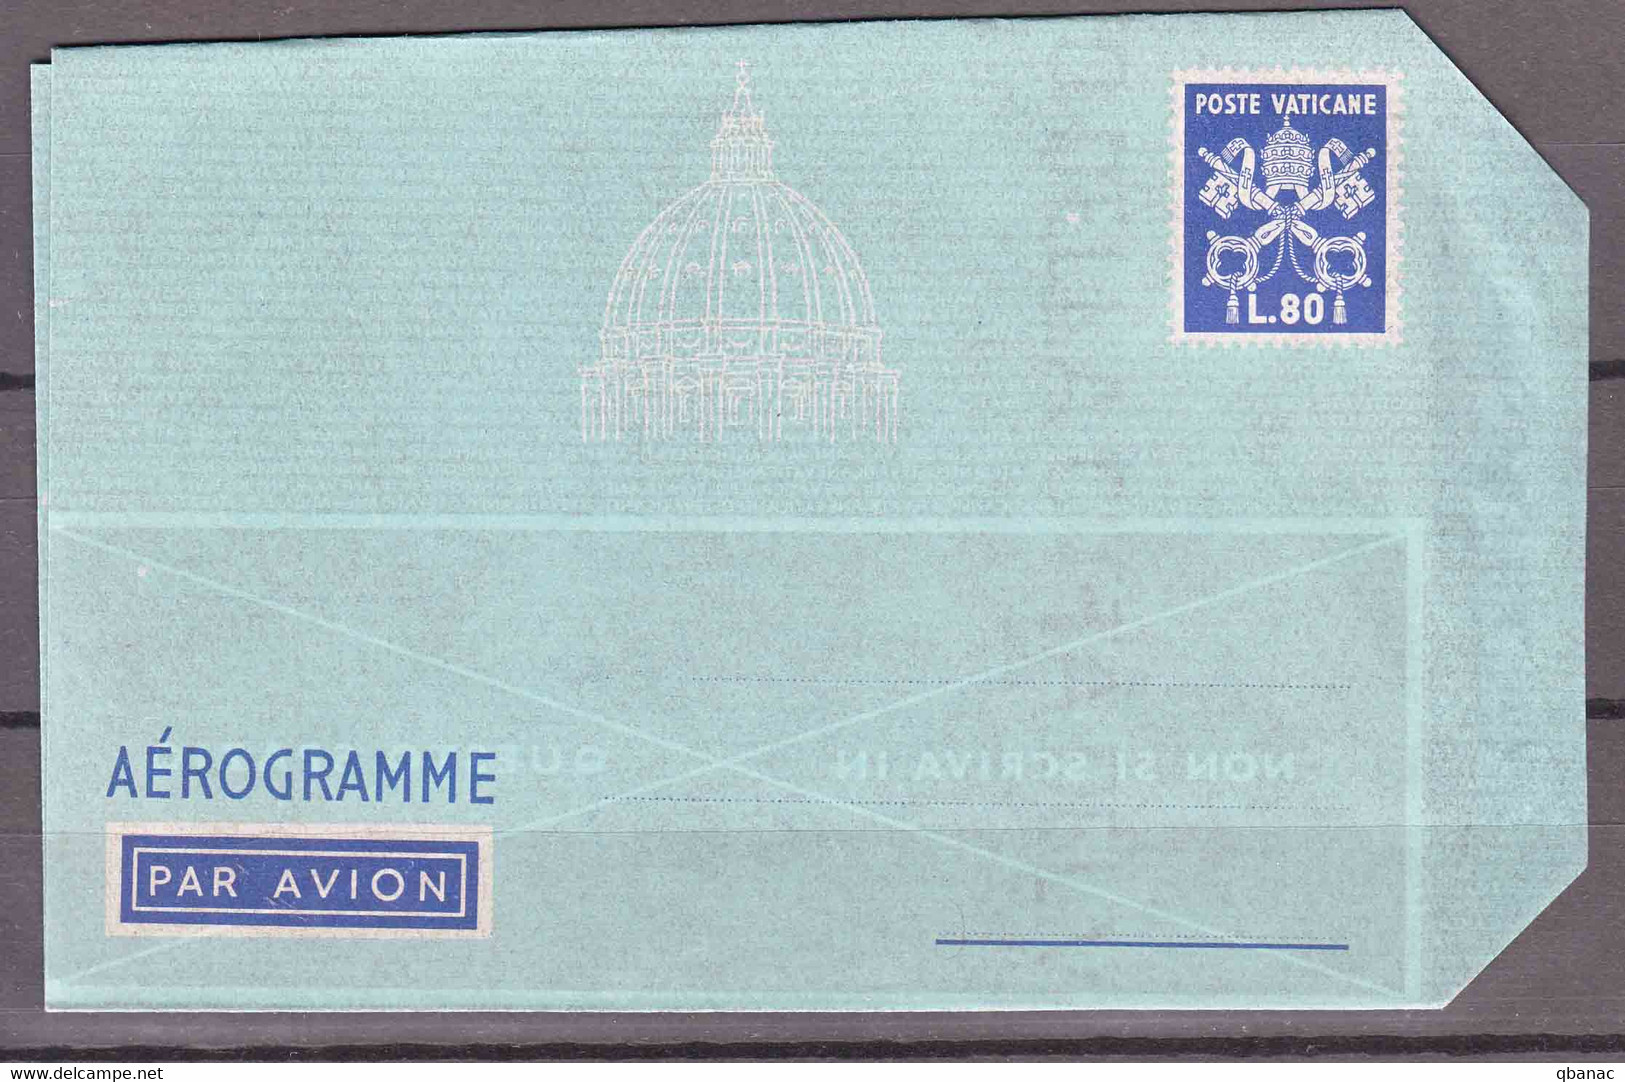 Vatican Aerogramme, Aerogramma 80 Lire Scott#LF6 Watermark Variety, Value 200 Eur - Entiers Postaux